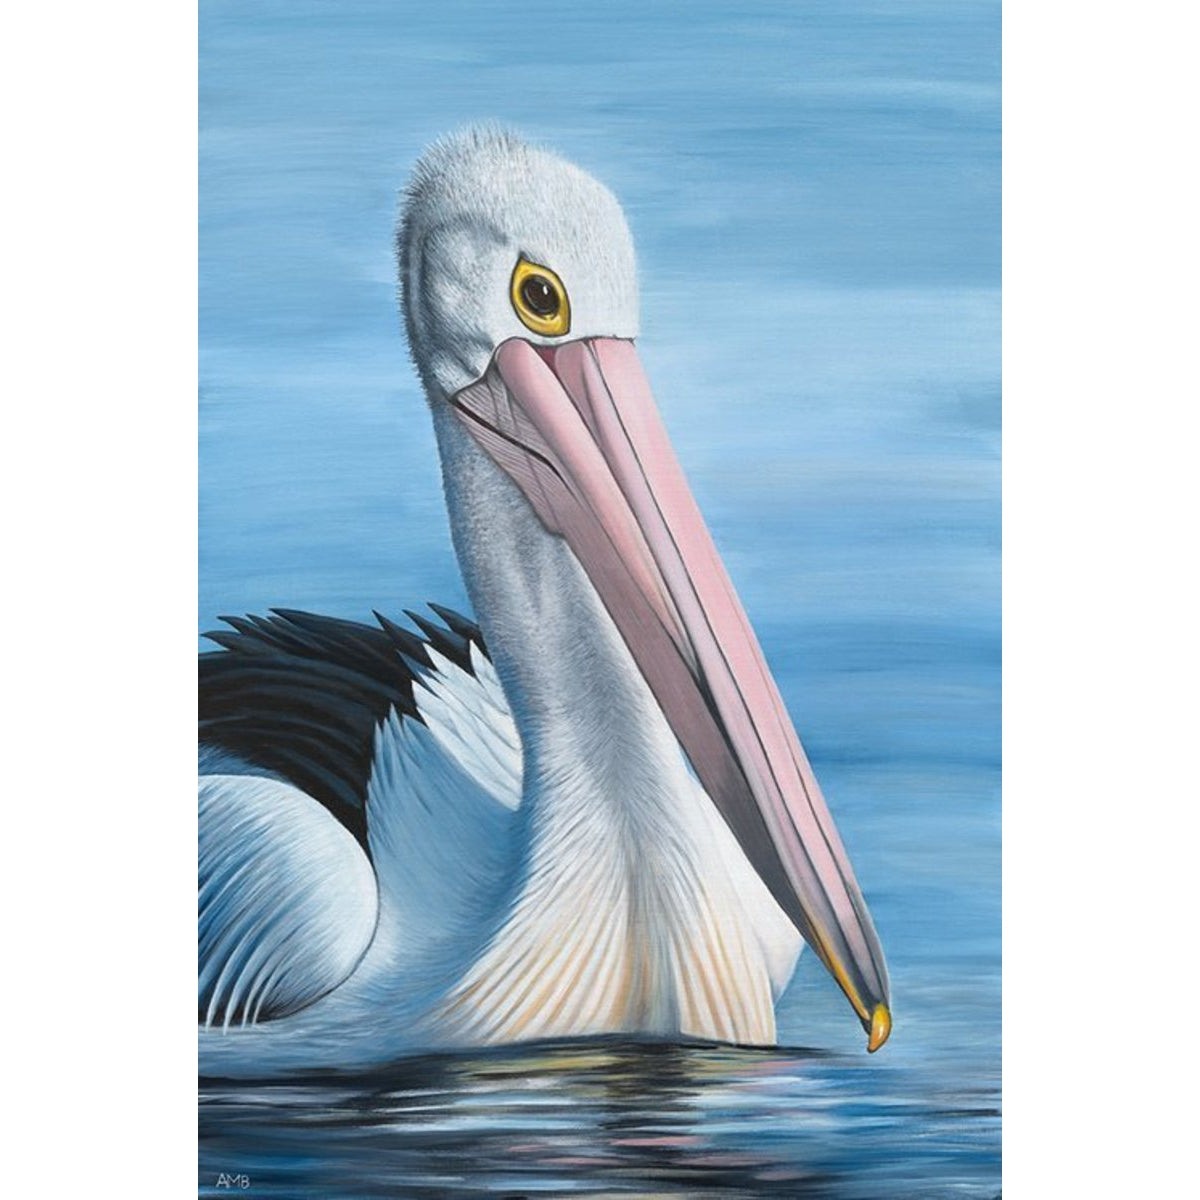 Alan the Pelican